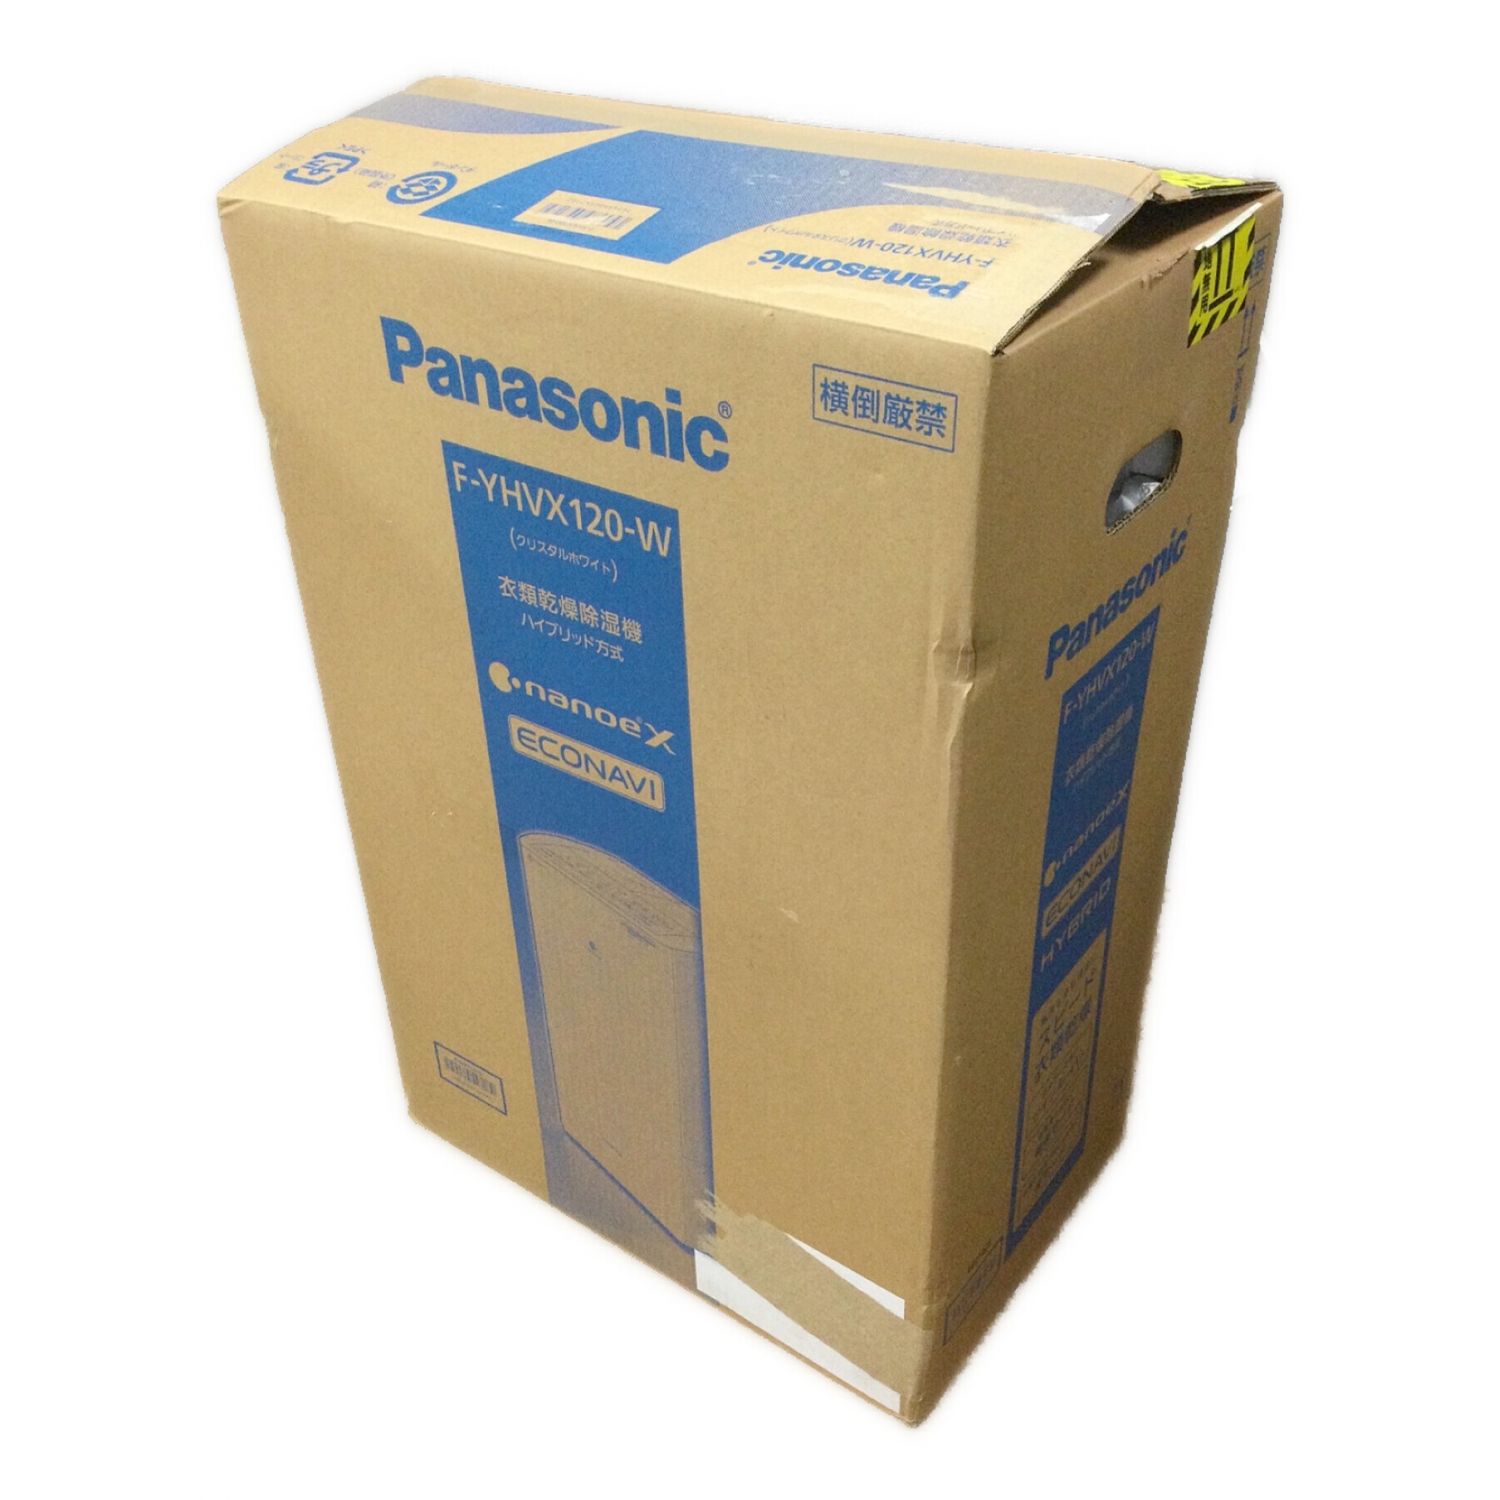 Panasonic F-YHVX120-W WHITE - 除湿機・乾燥機